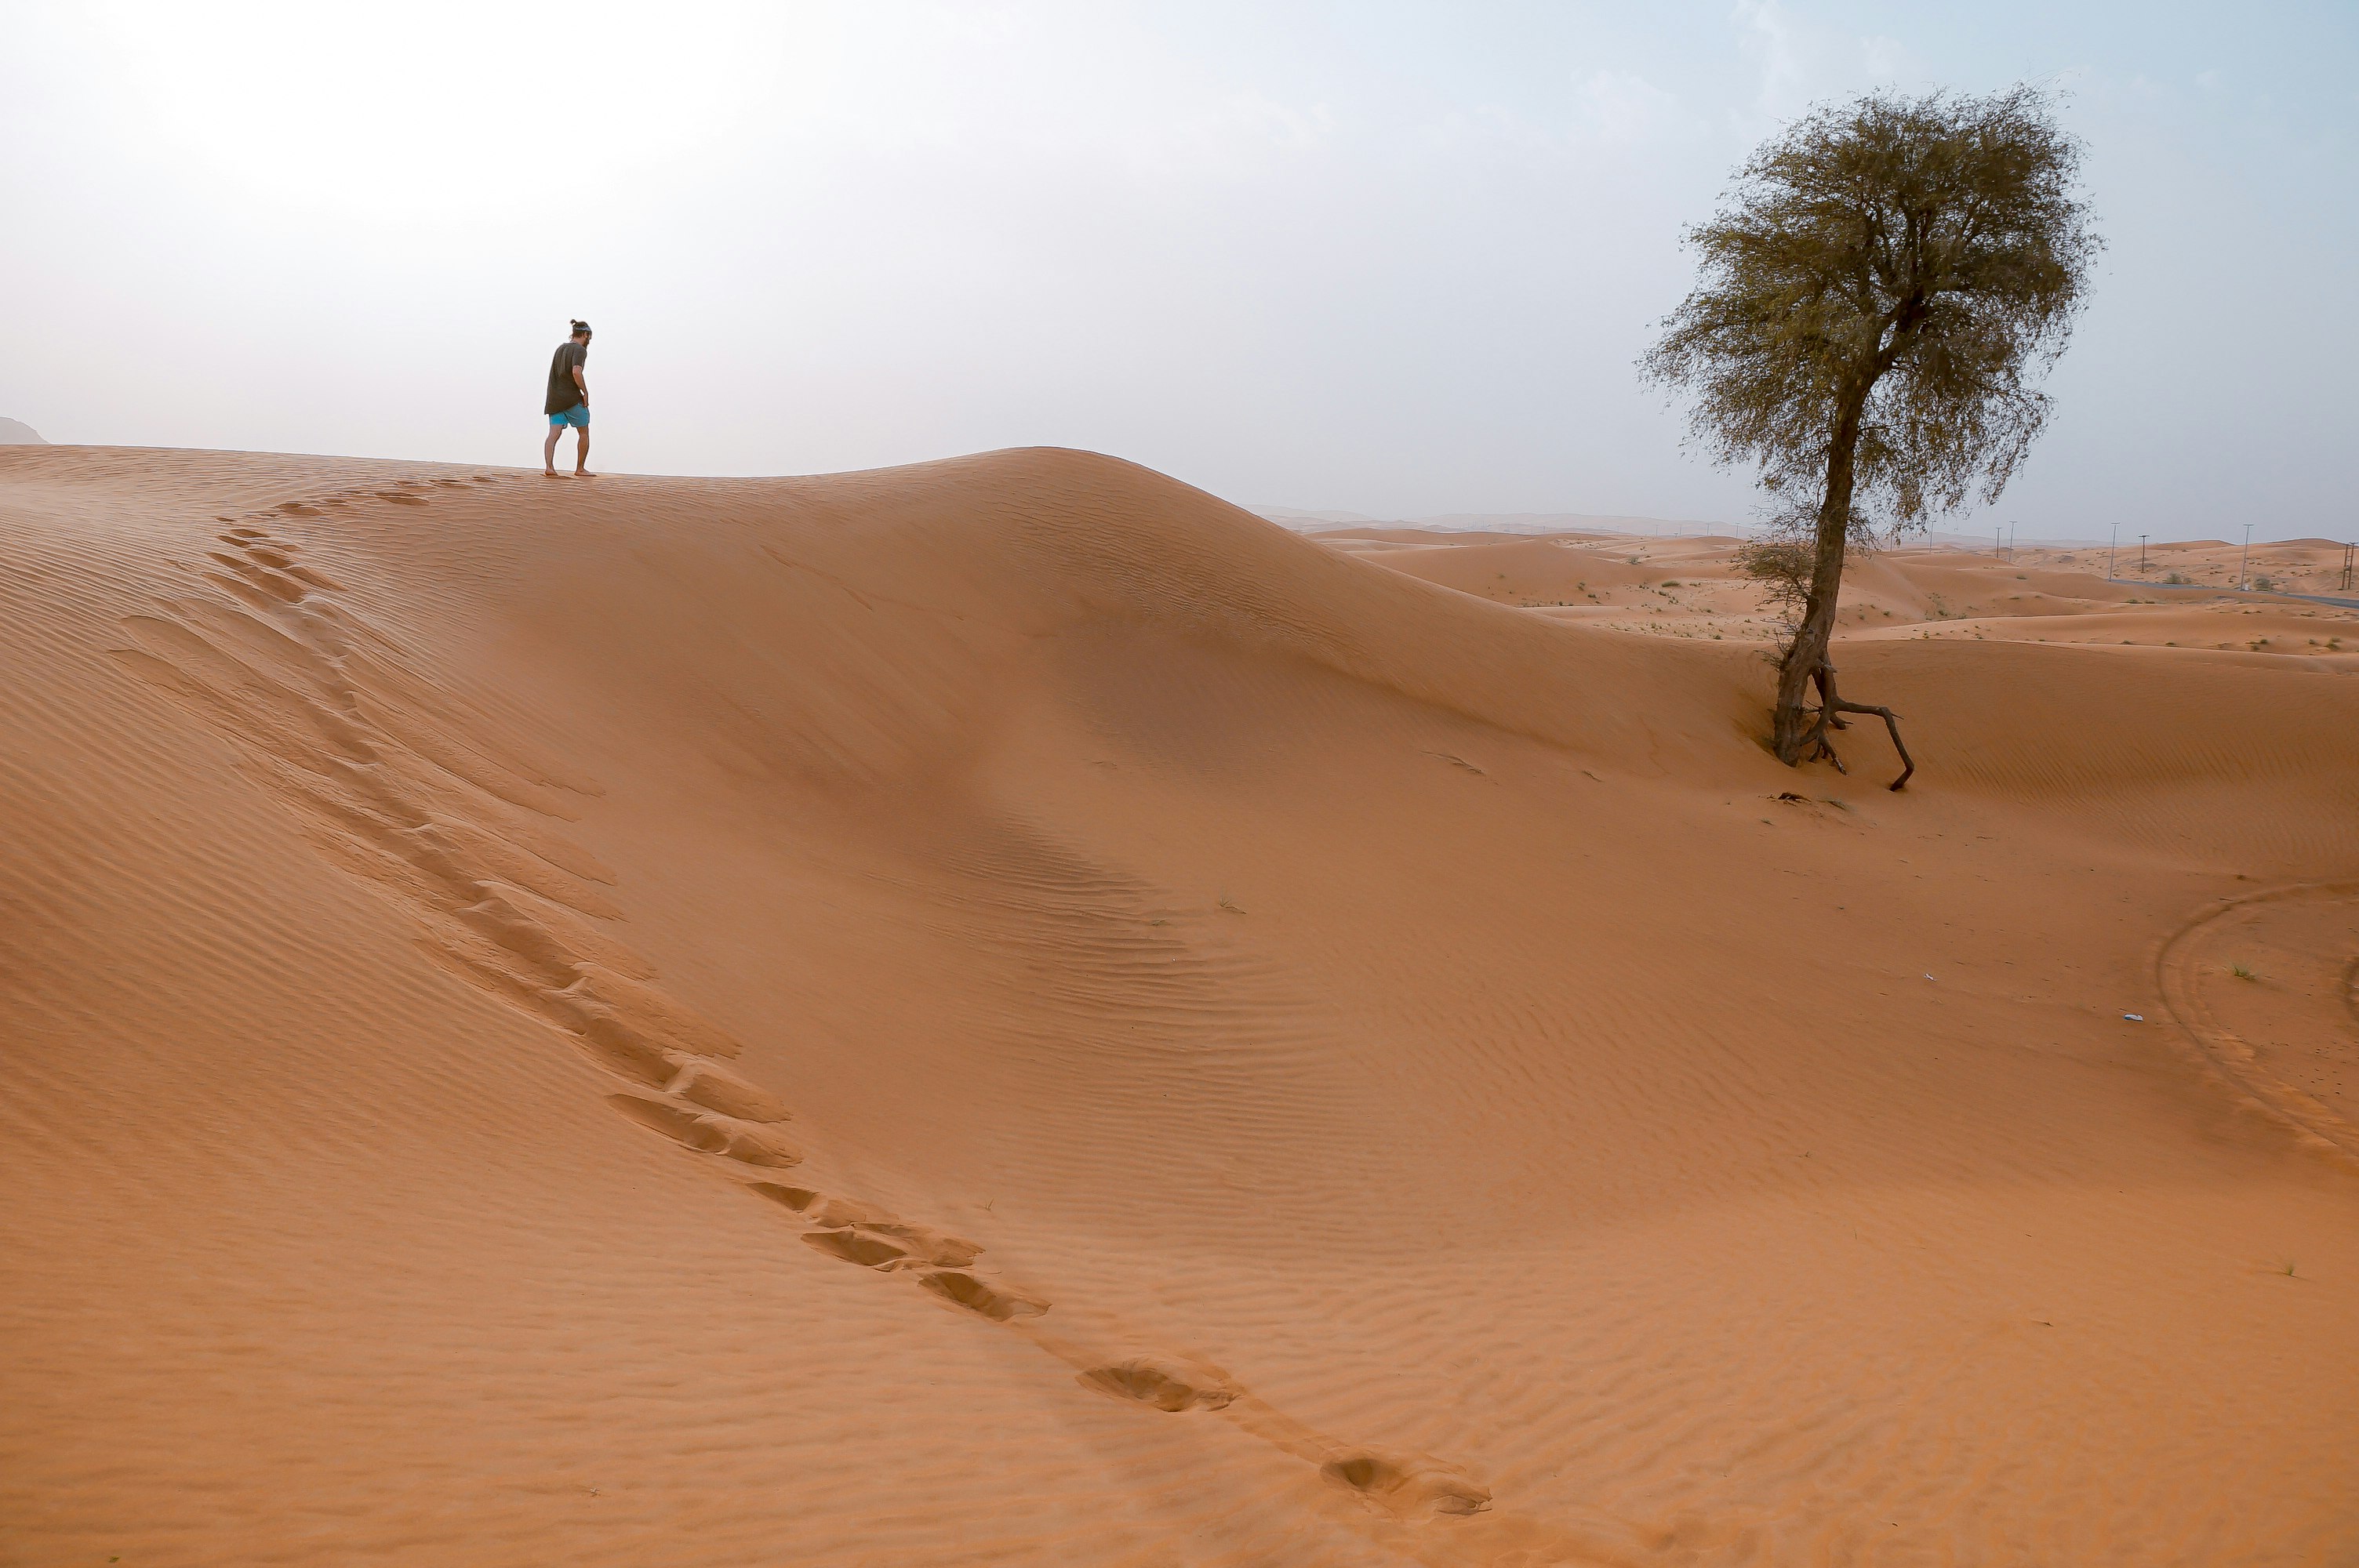 man walking on desert with one tree during daytime